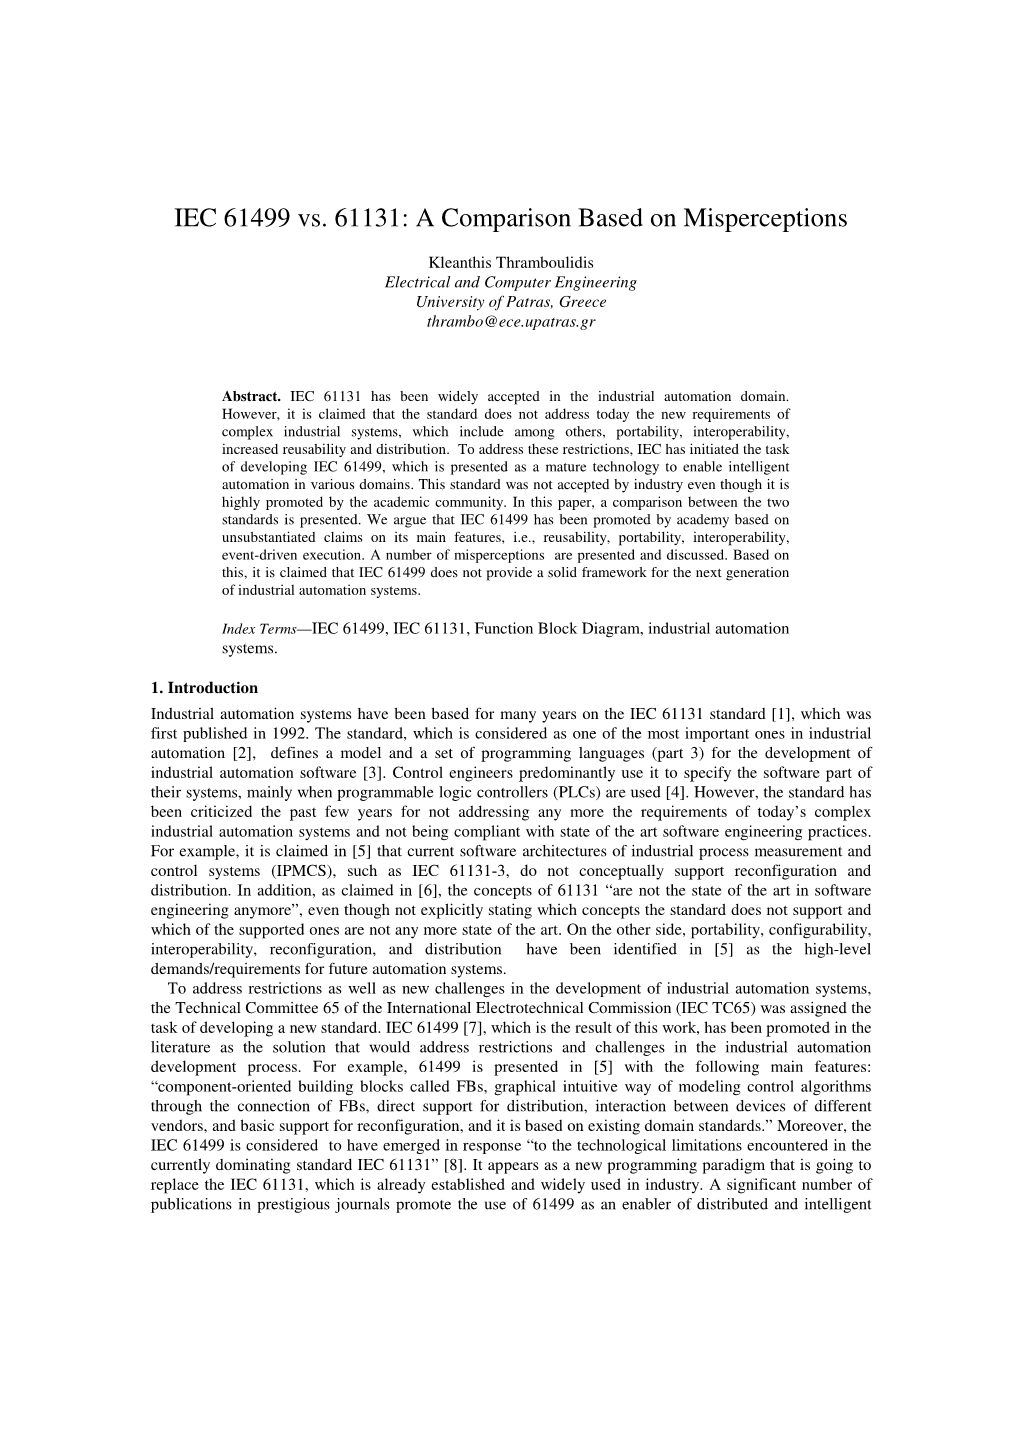 IEC 61499 Vs. 61131: a Comparison Based on Misperceptions